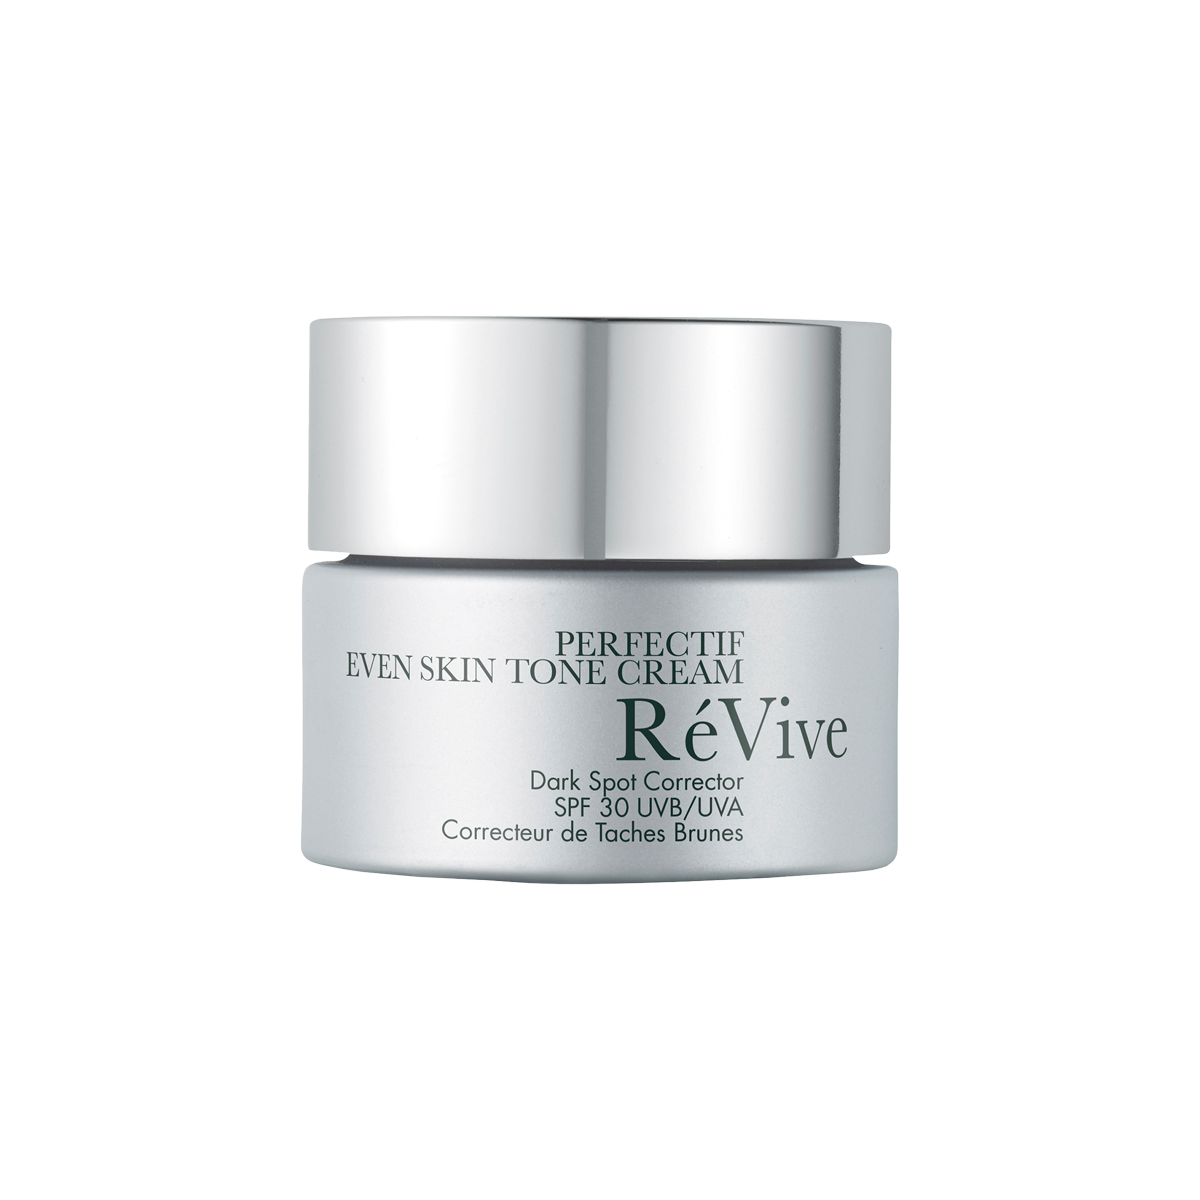 Revive - Perfectif Even Skin Tone Cream